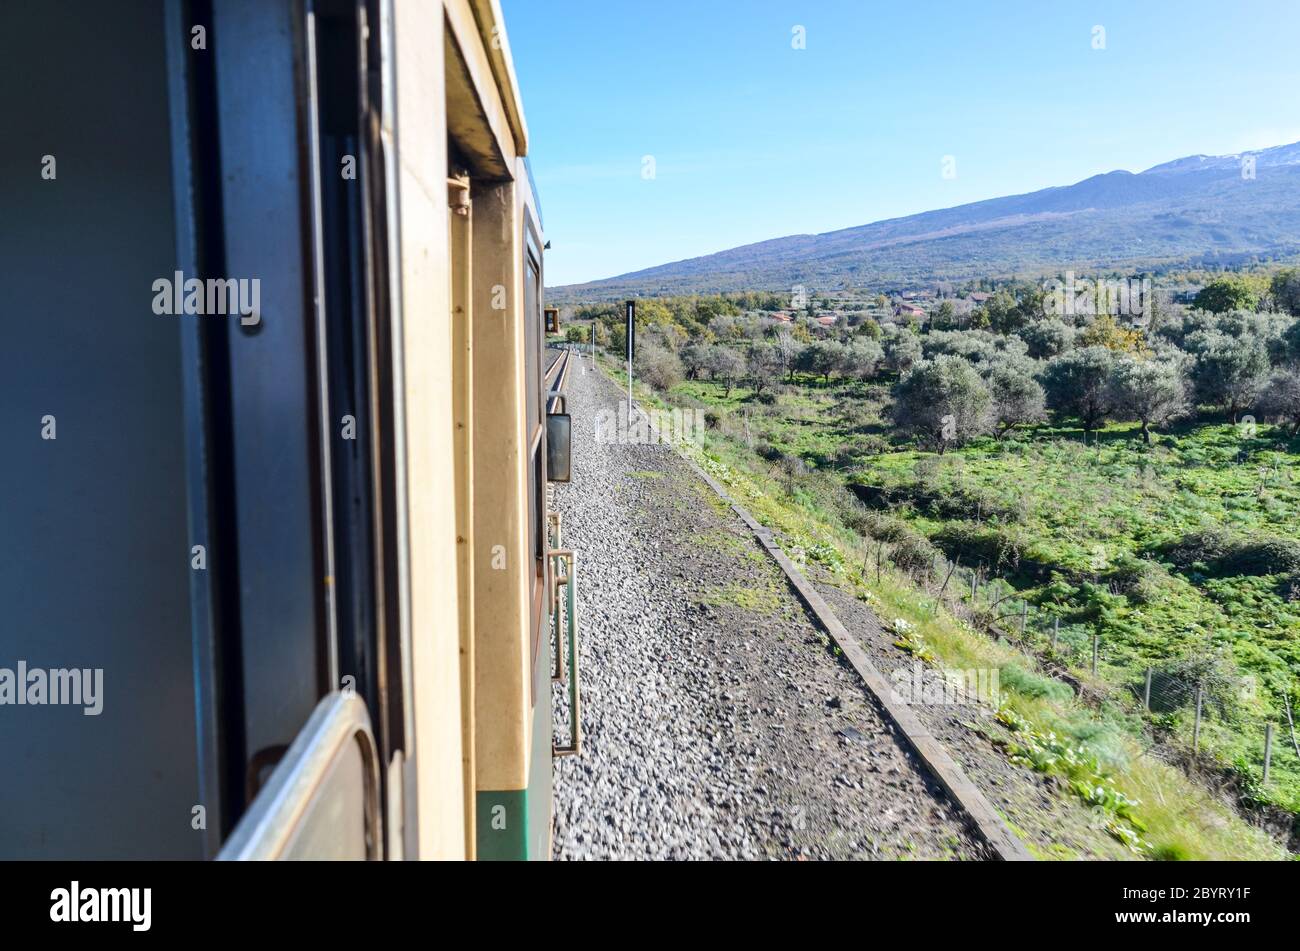 Ferrovia Circumetnea, train line around the Mount Etna, Sicily, Italy Stock Photo